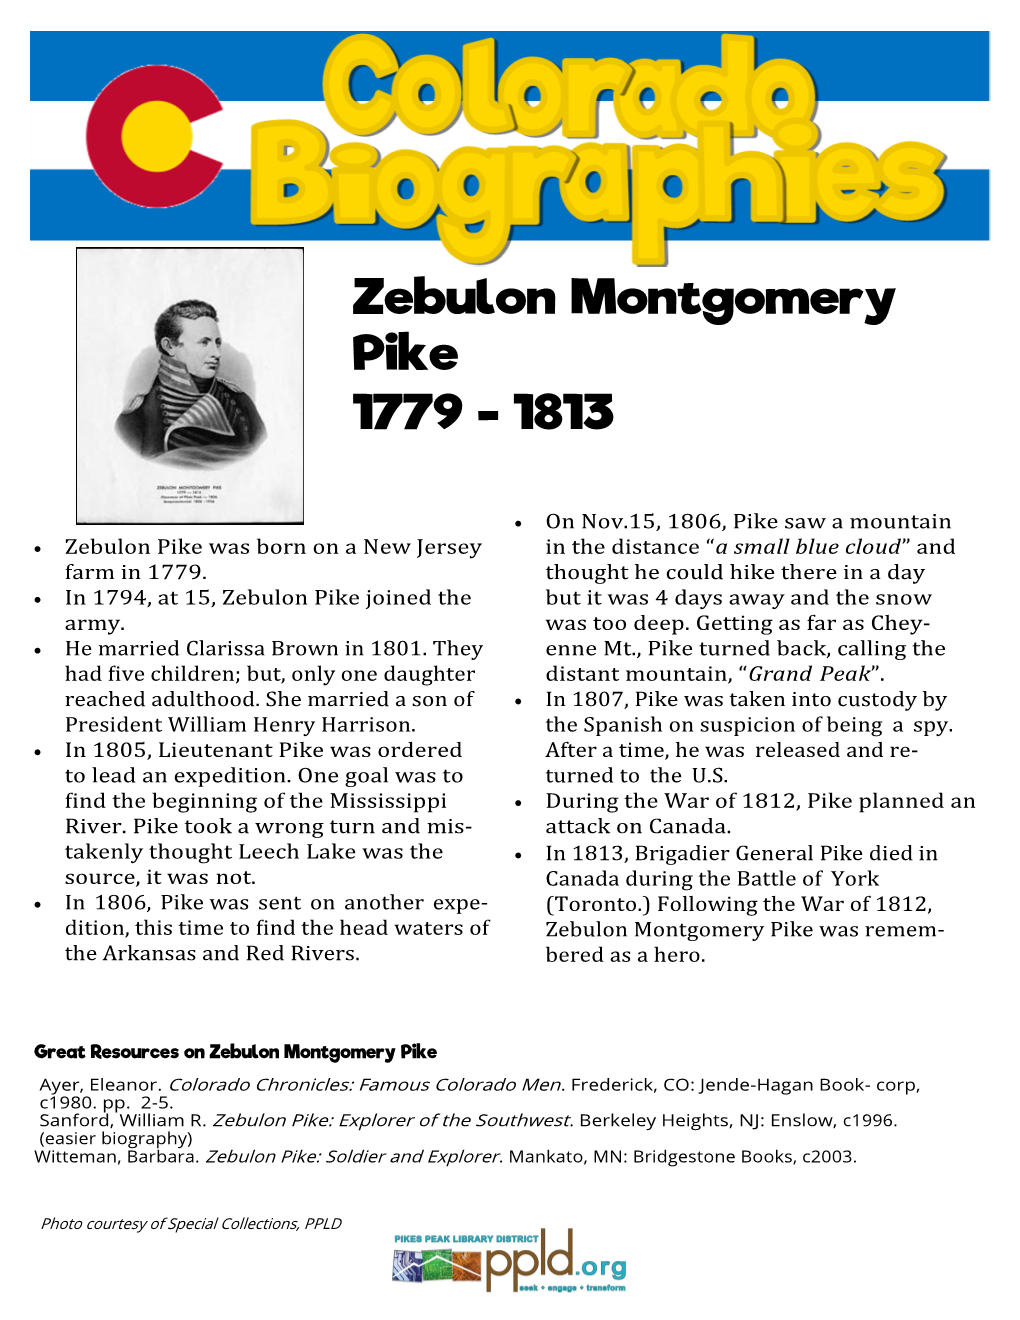 Zebulon Montgomery Pike 1779 - 1813